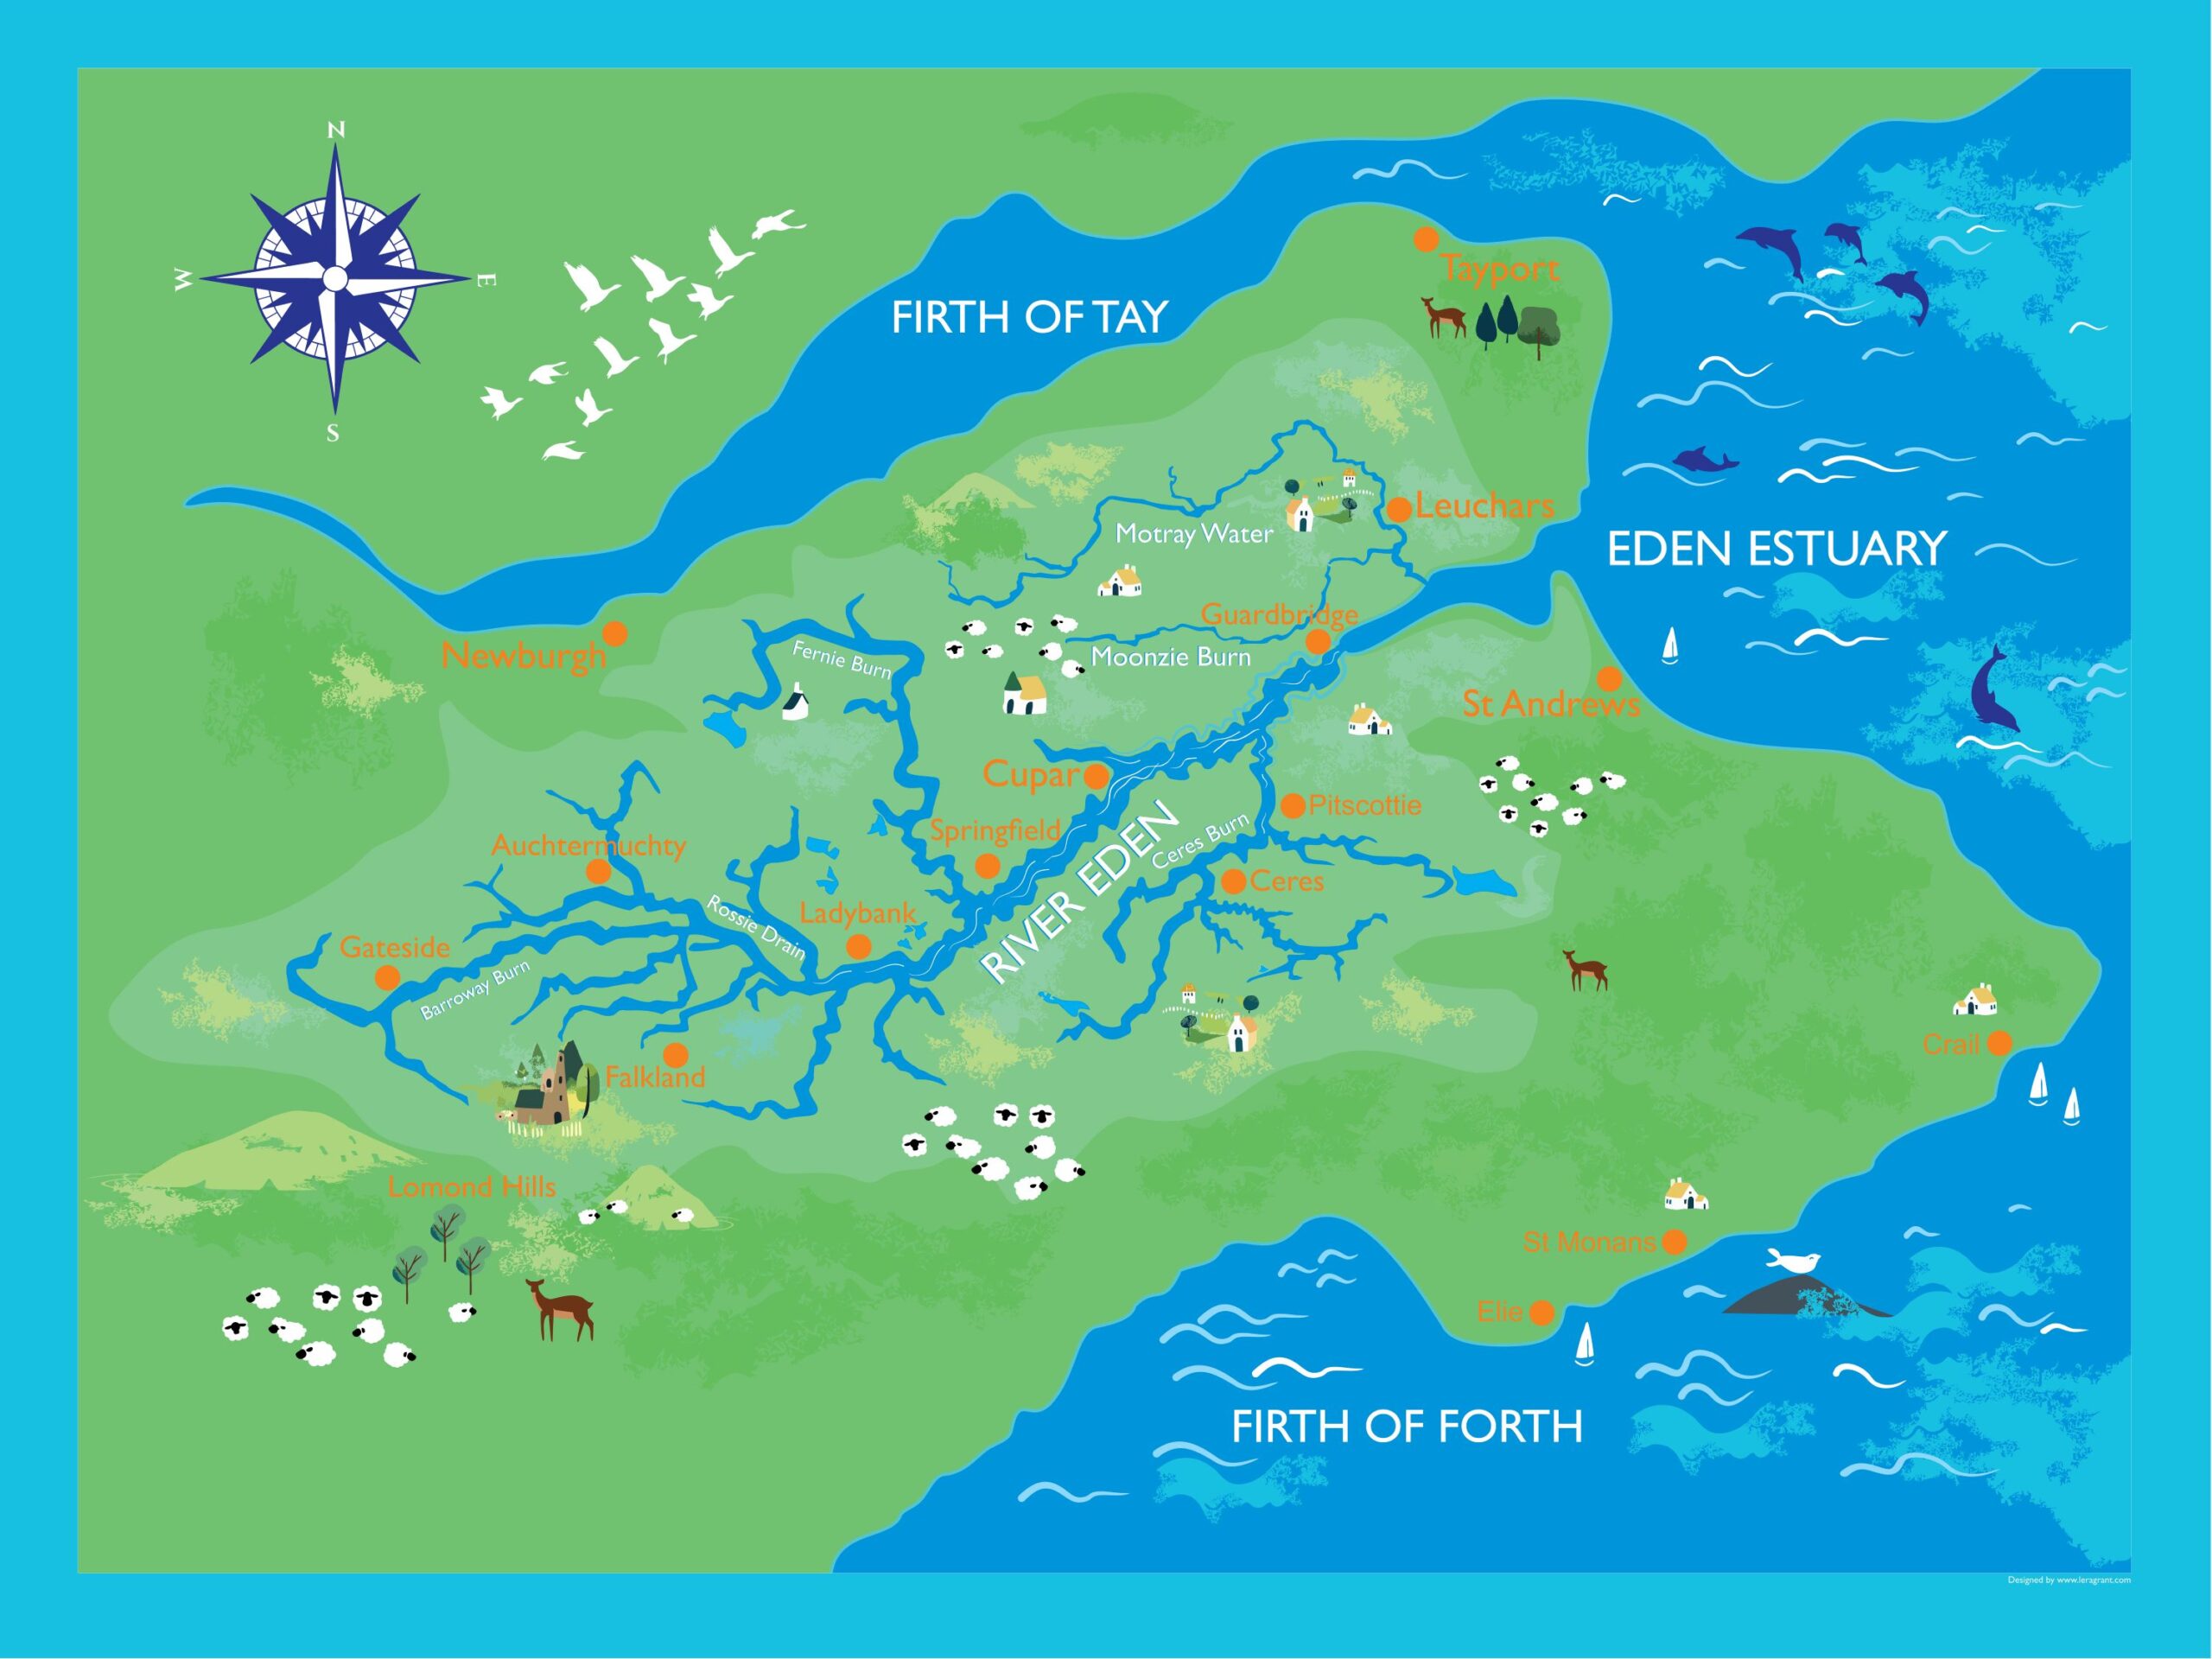 image of river eden fife map